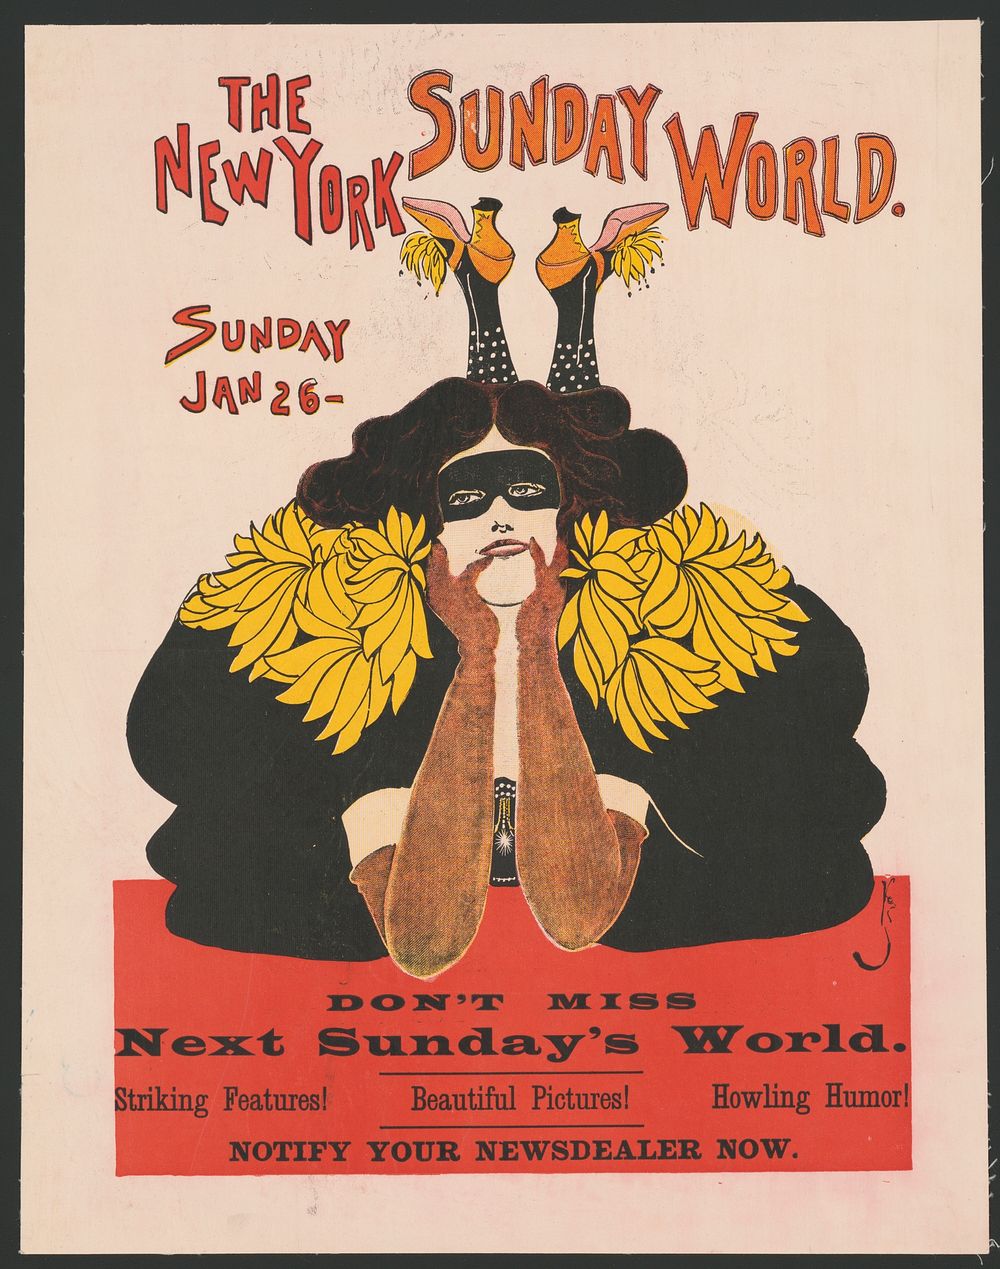 The New York Sunday World. Sunday Jan. 26.